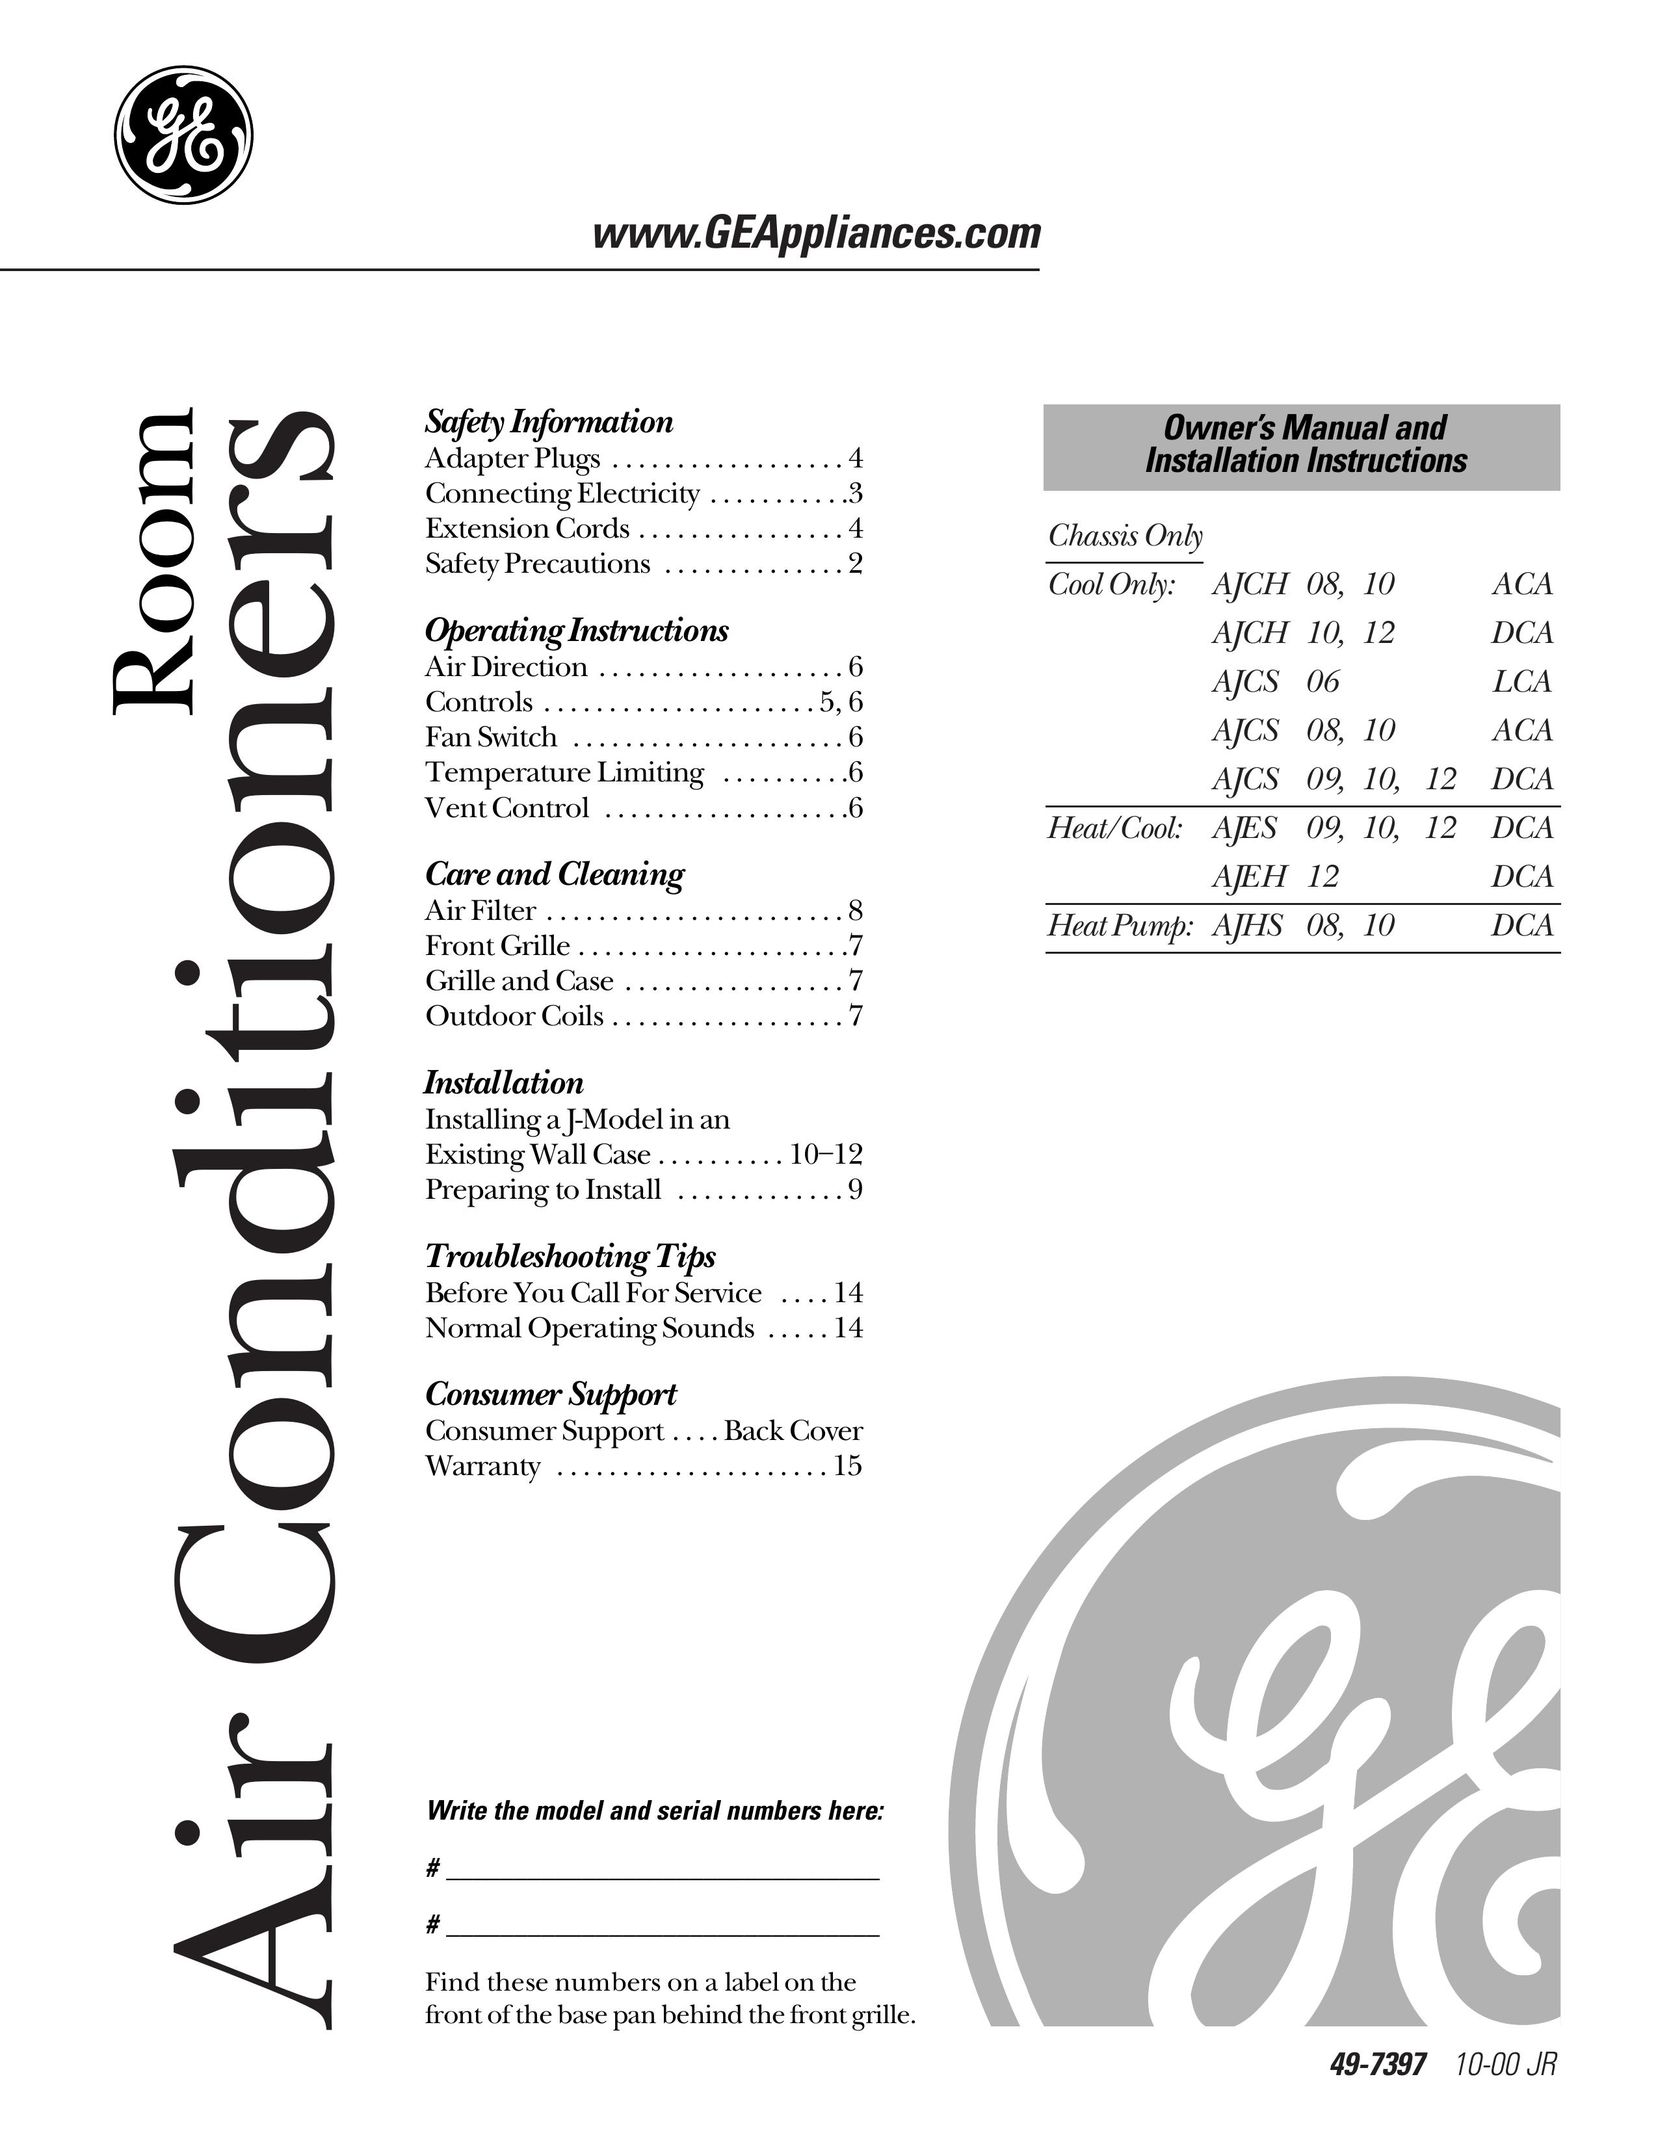 GE 10 DCA Air Conditioner User Manual